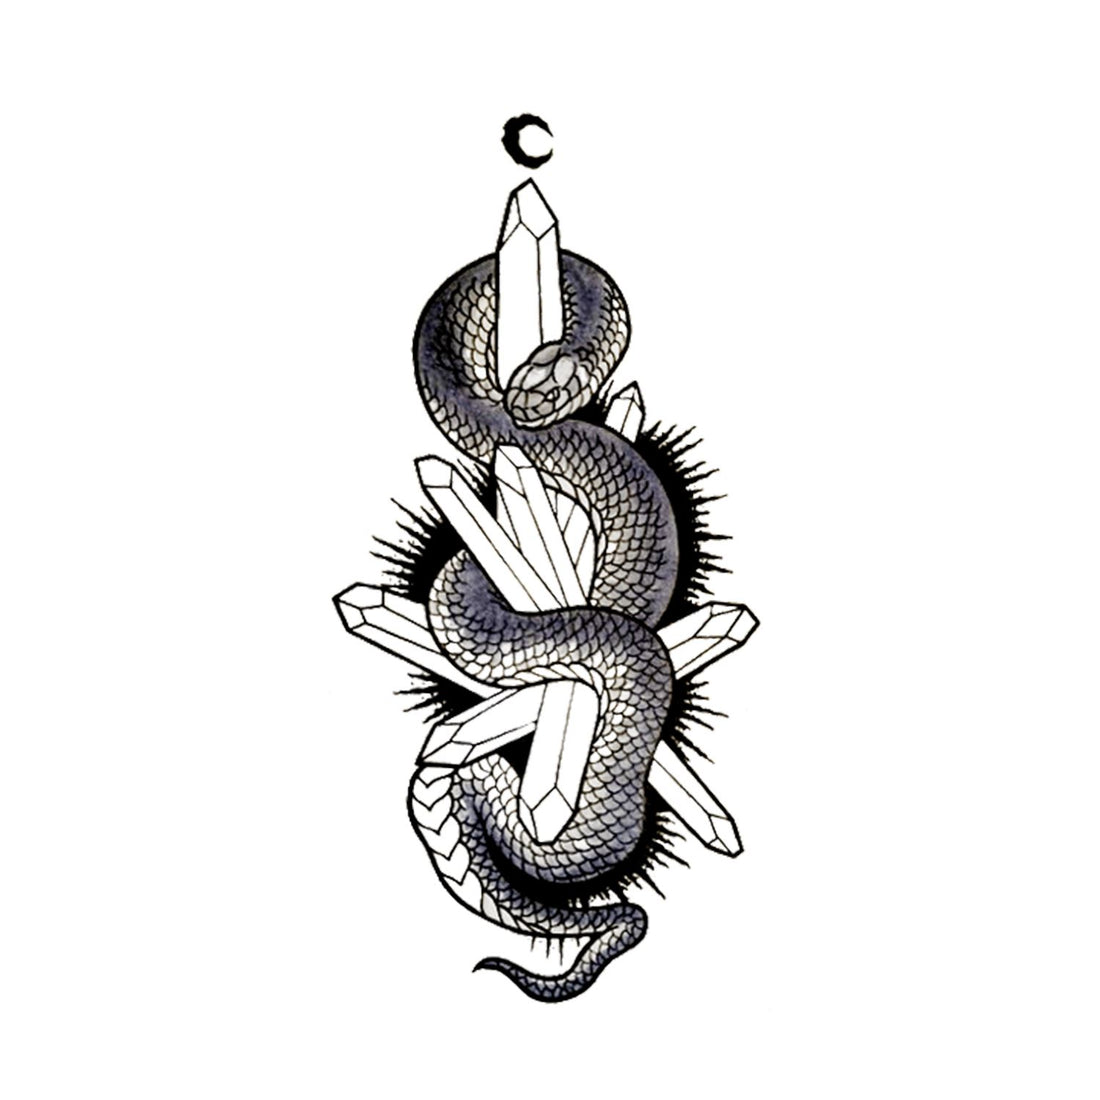 Crystal Serpent Temporary Tattoo Momentary Ink